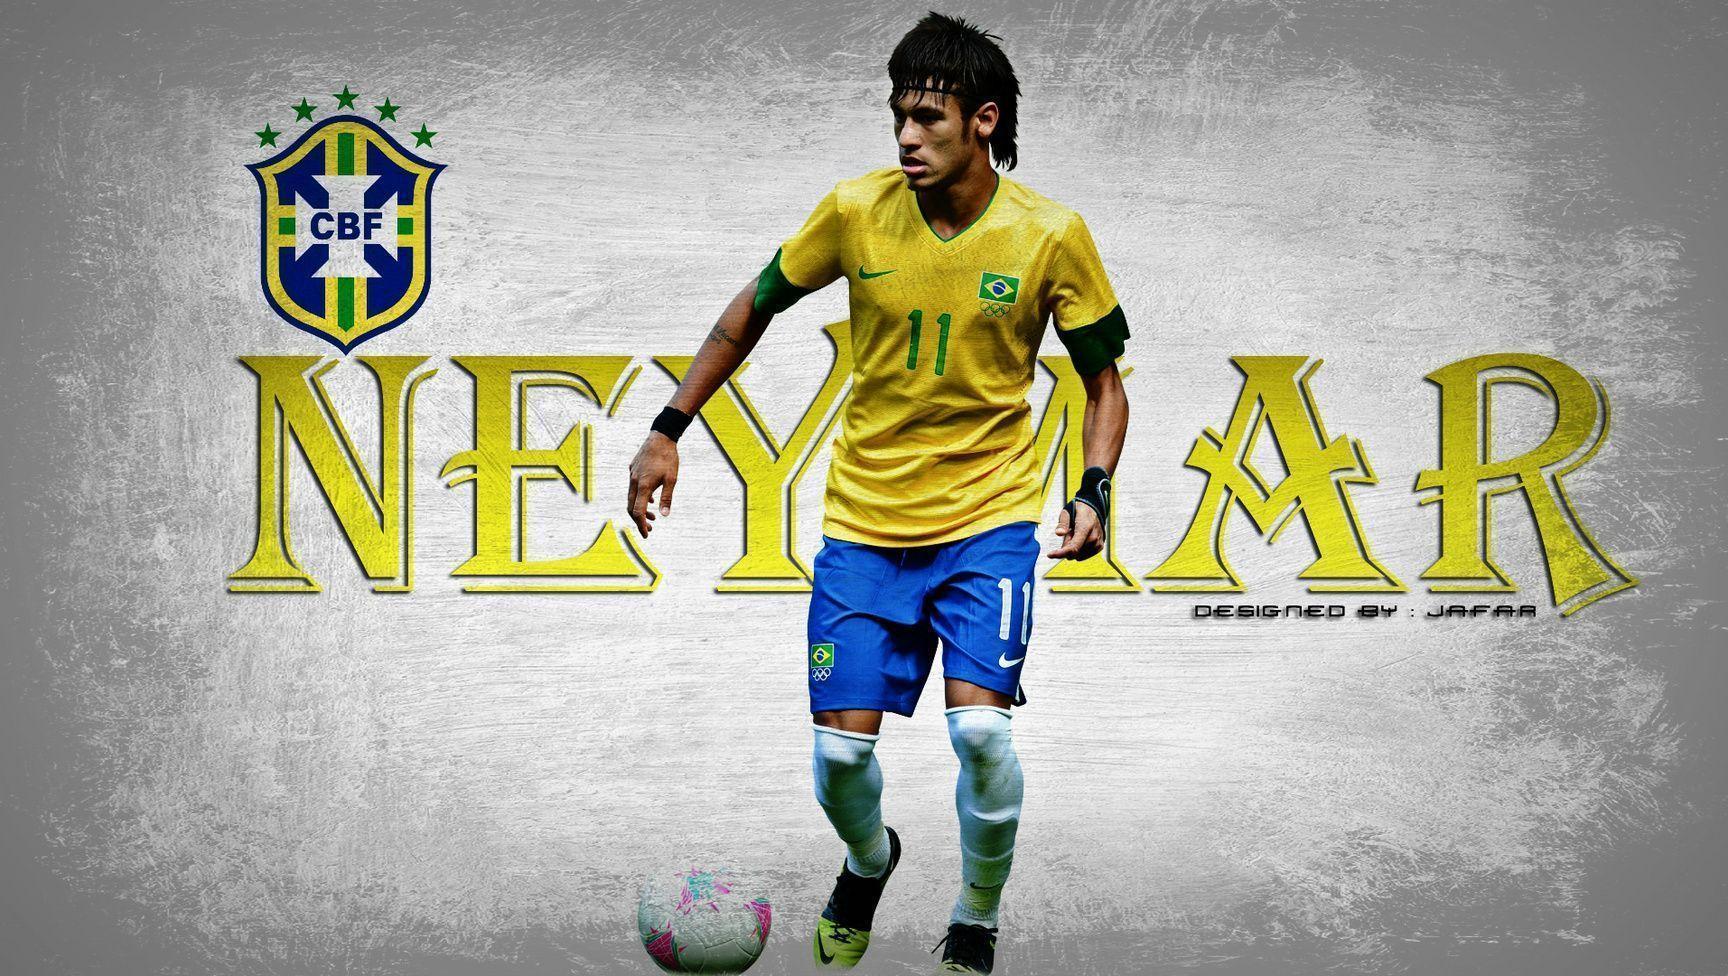 Wallpaper Neymar Jr 2012 · Neymar Wallpaper. Best Desktop